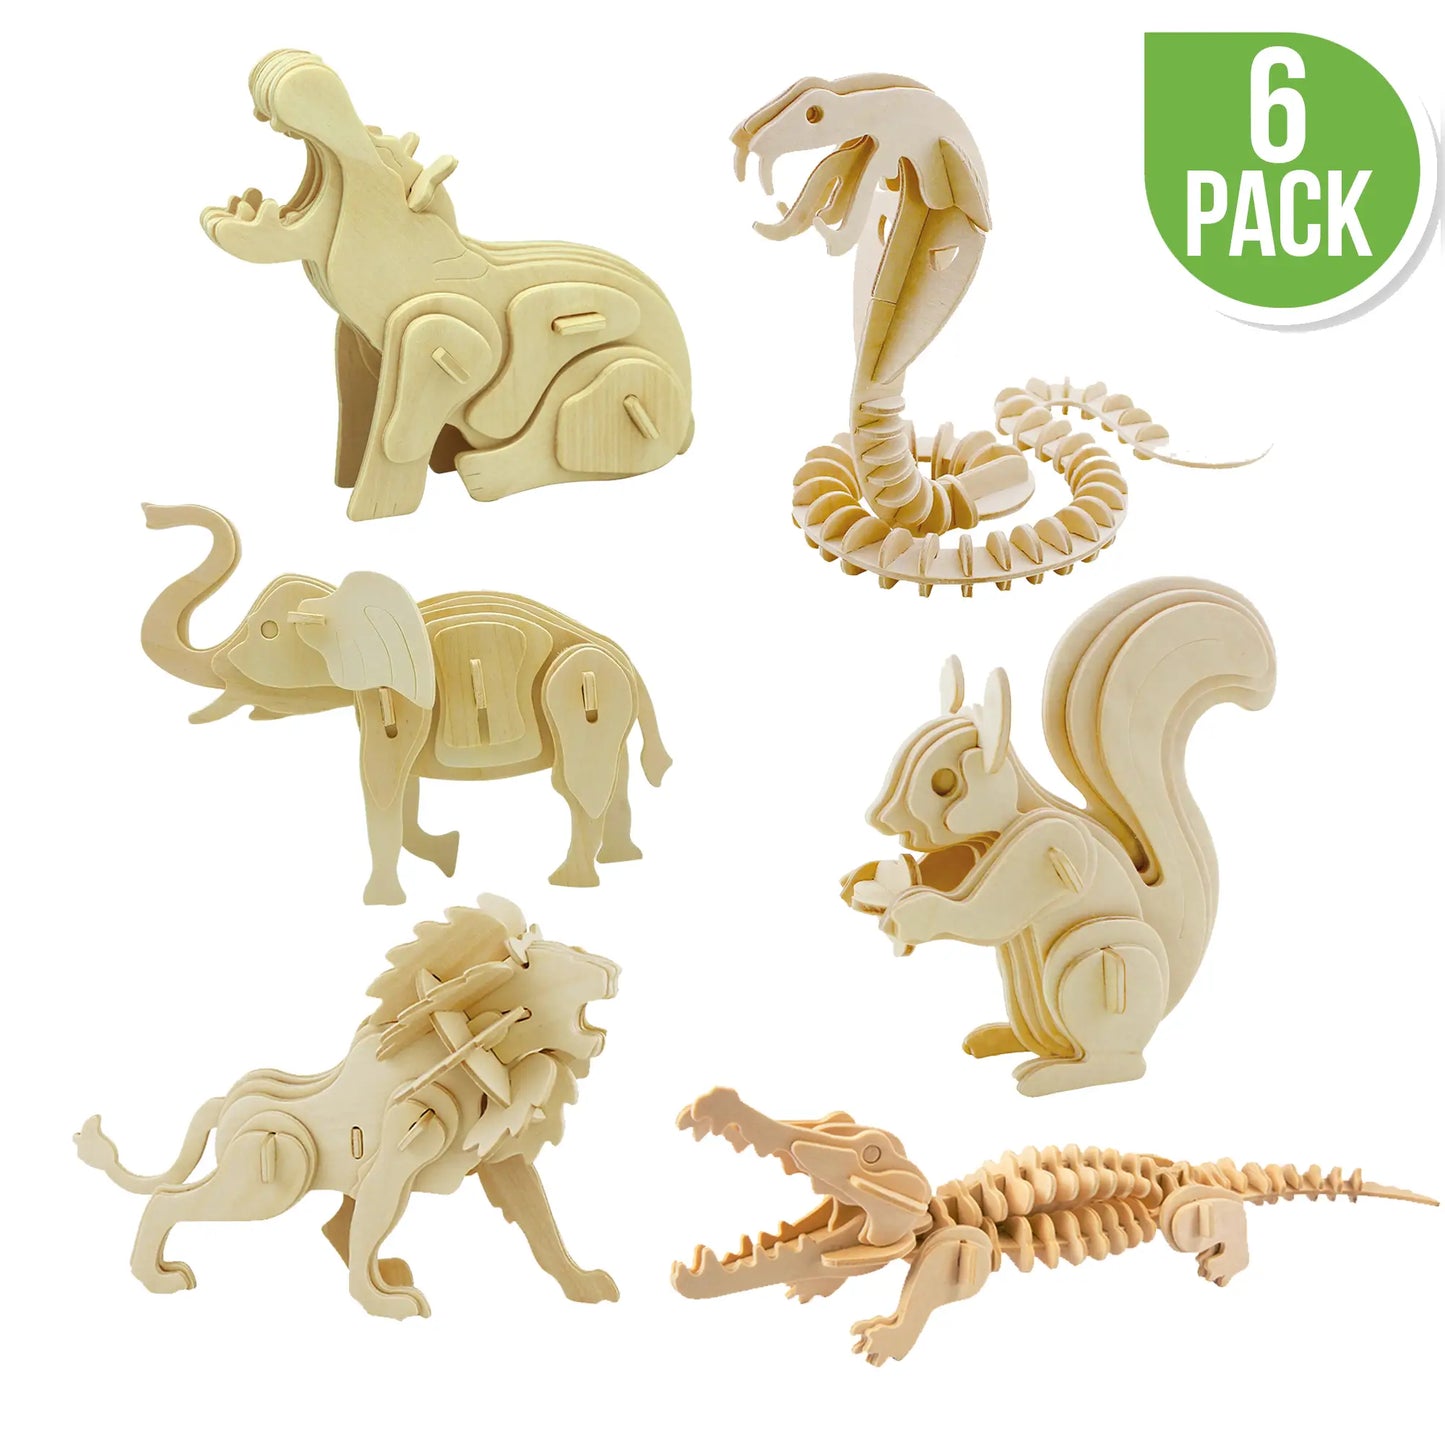 DIY 3D Wooden Puzzle Bundle Pack: Wild Animals